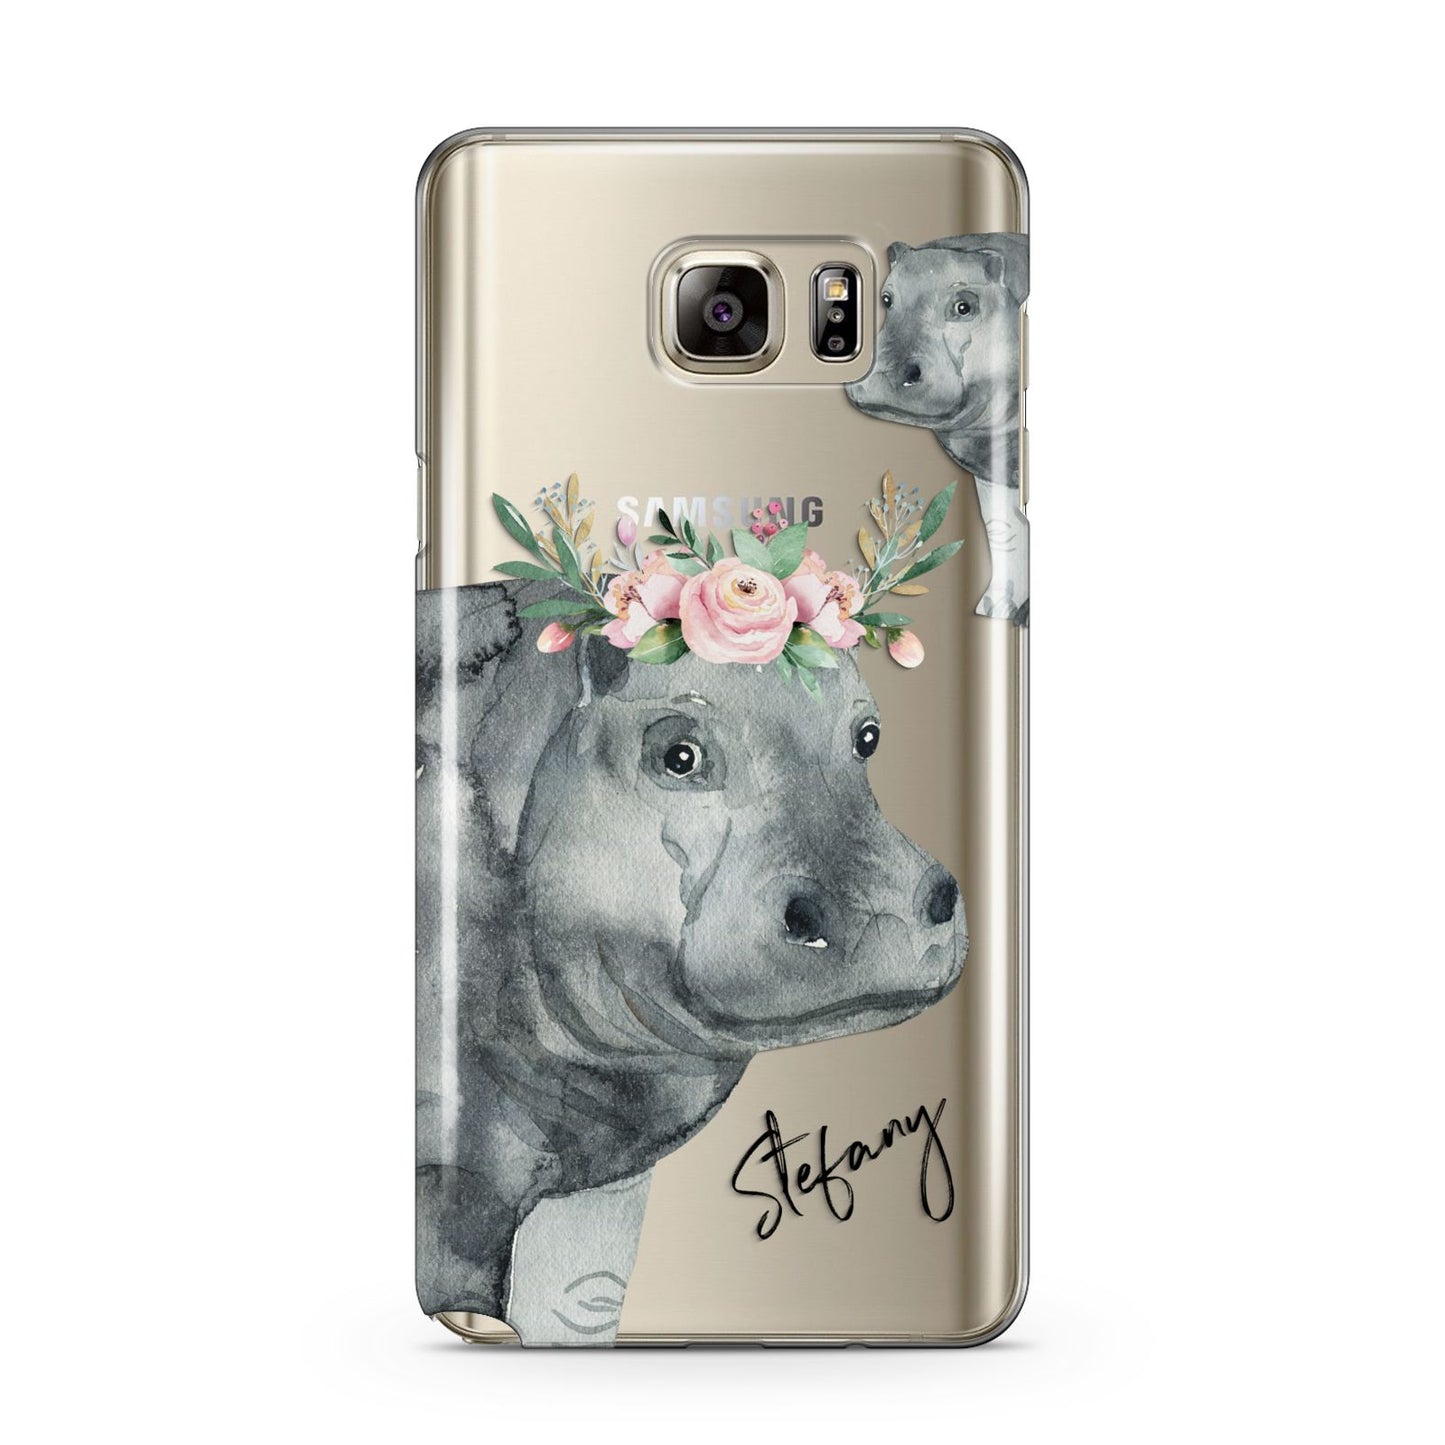 Personalised Hippopotamus Samsung Galaxy Note 5 Case